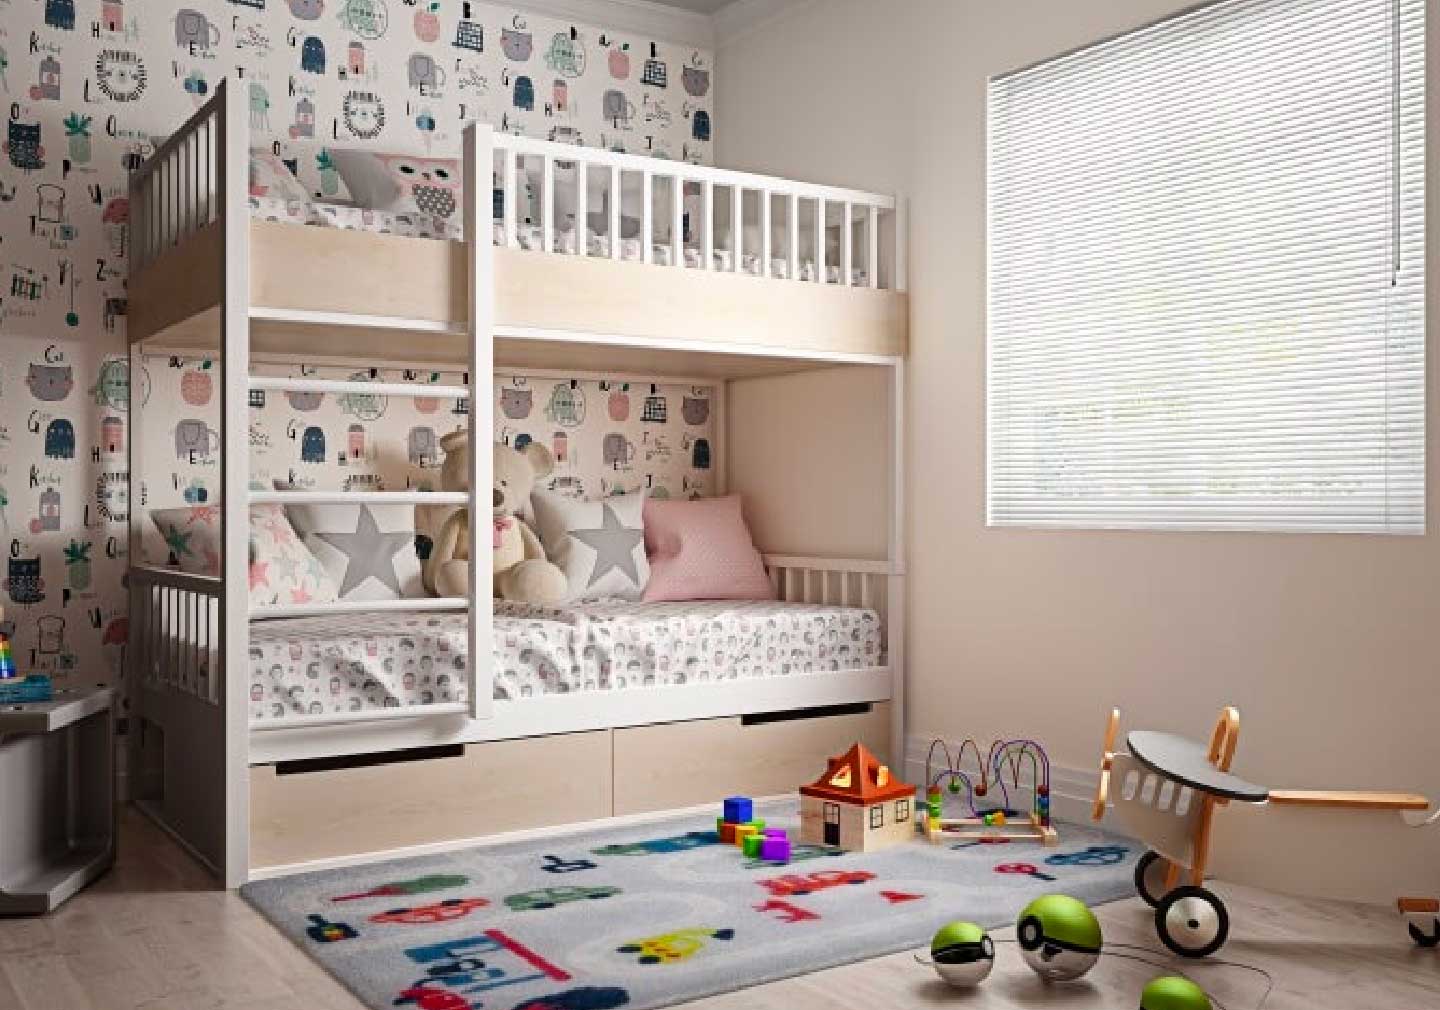 Bunker bed design for your kid's bedroom